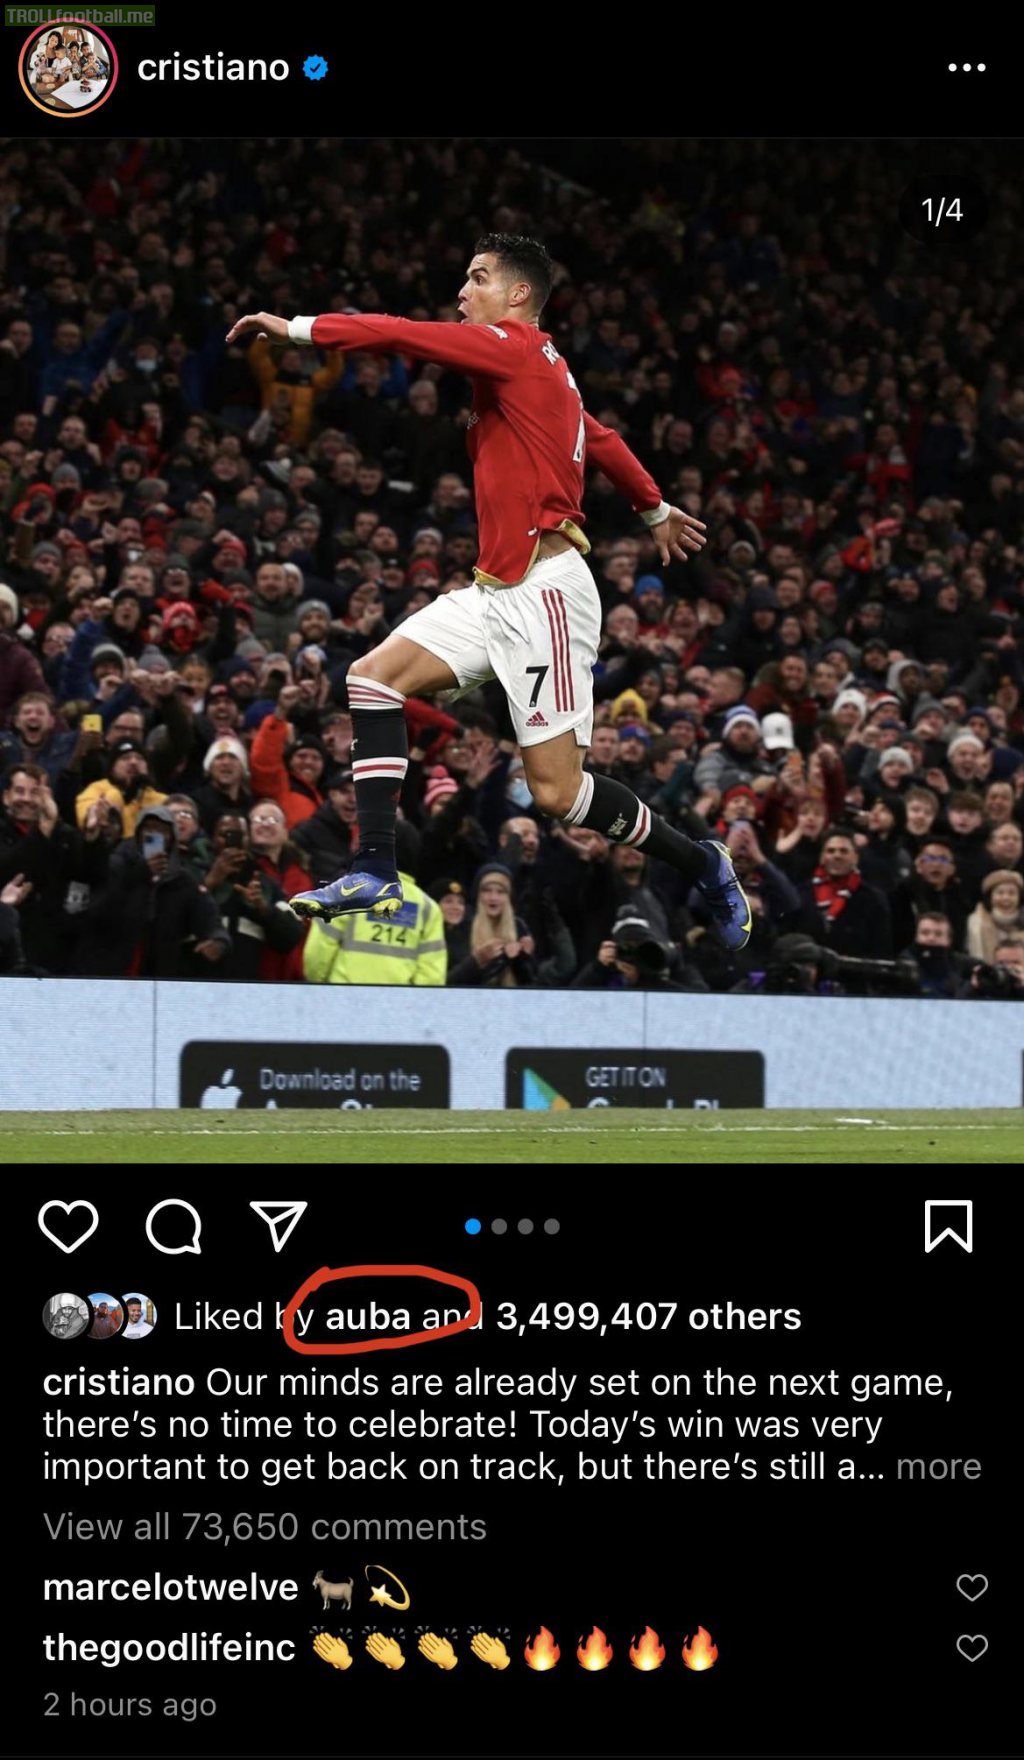 [Instagram] P-E Aubameyang likes Ronaldo’s Instagram post after Man Utd’s 3-2 victory against Arsenal today.